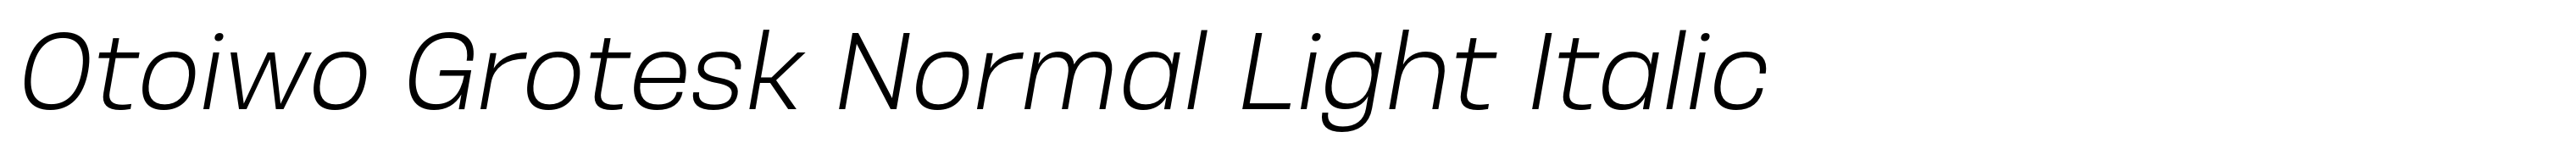 Otoiwo Grotesk Normal Light Italic